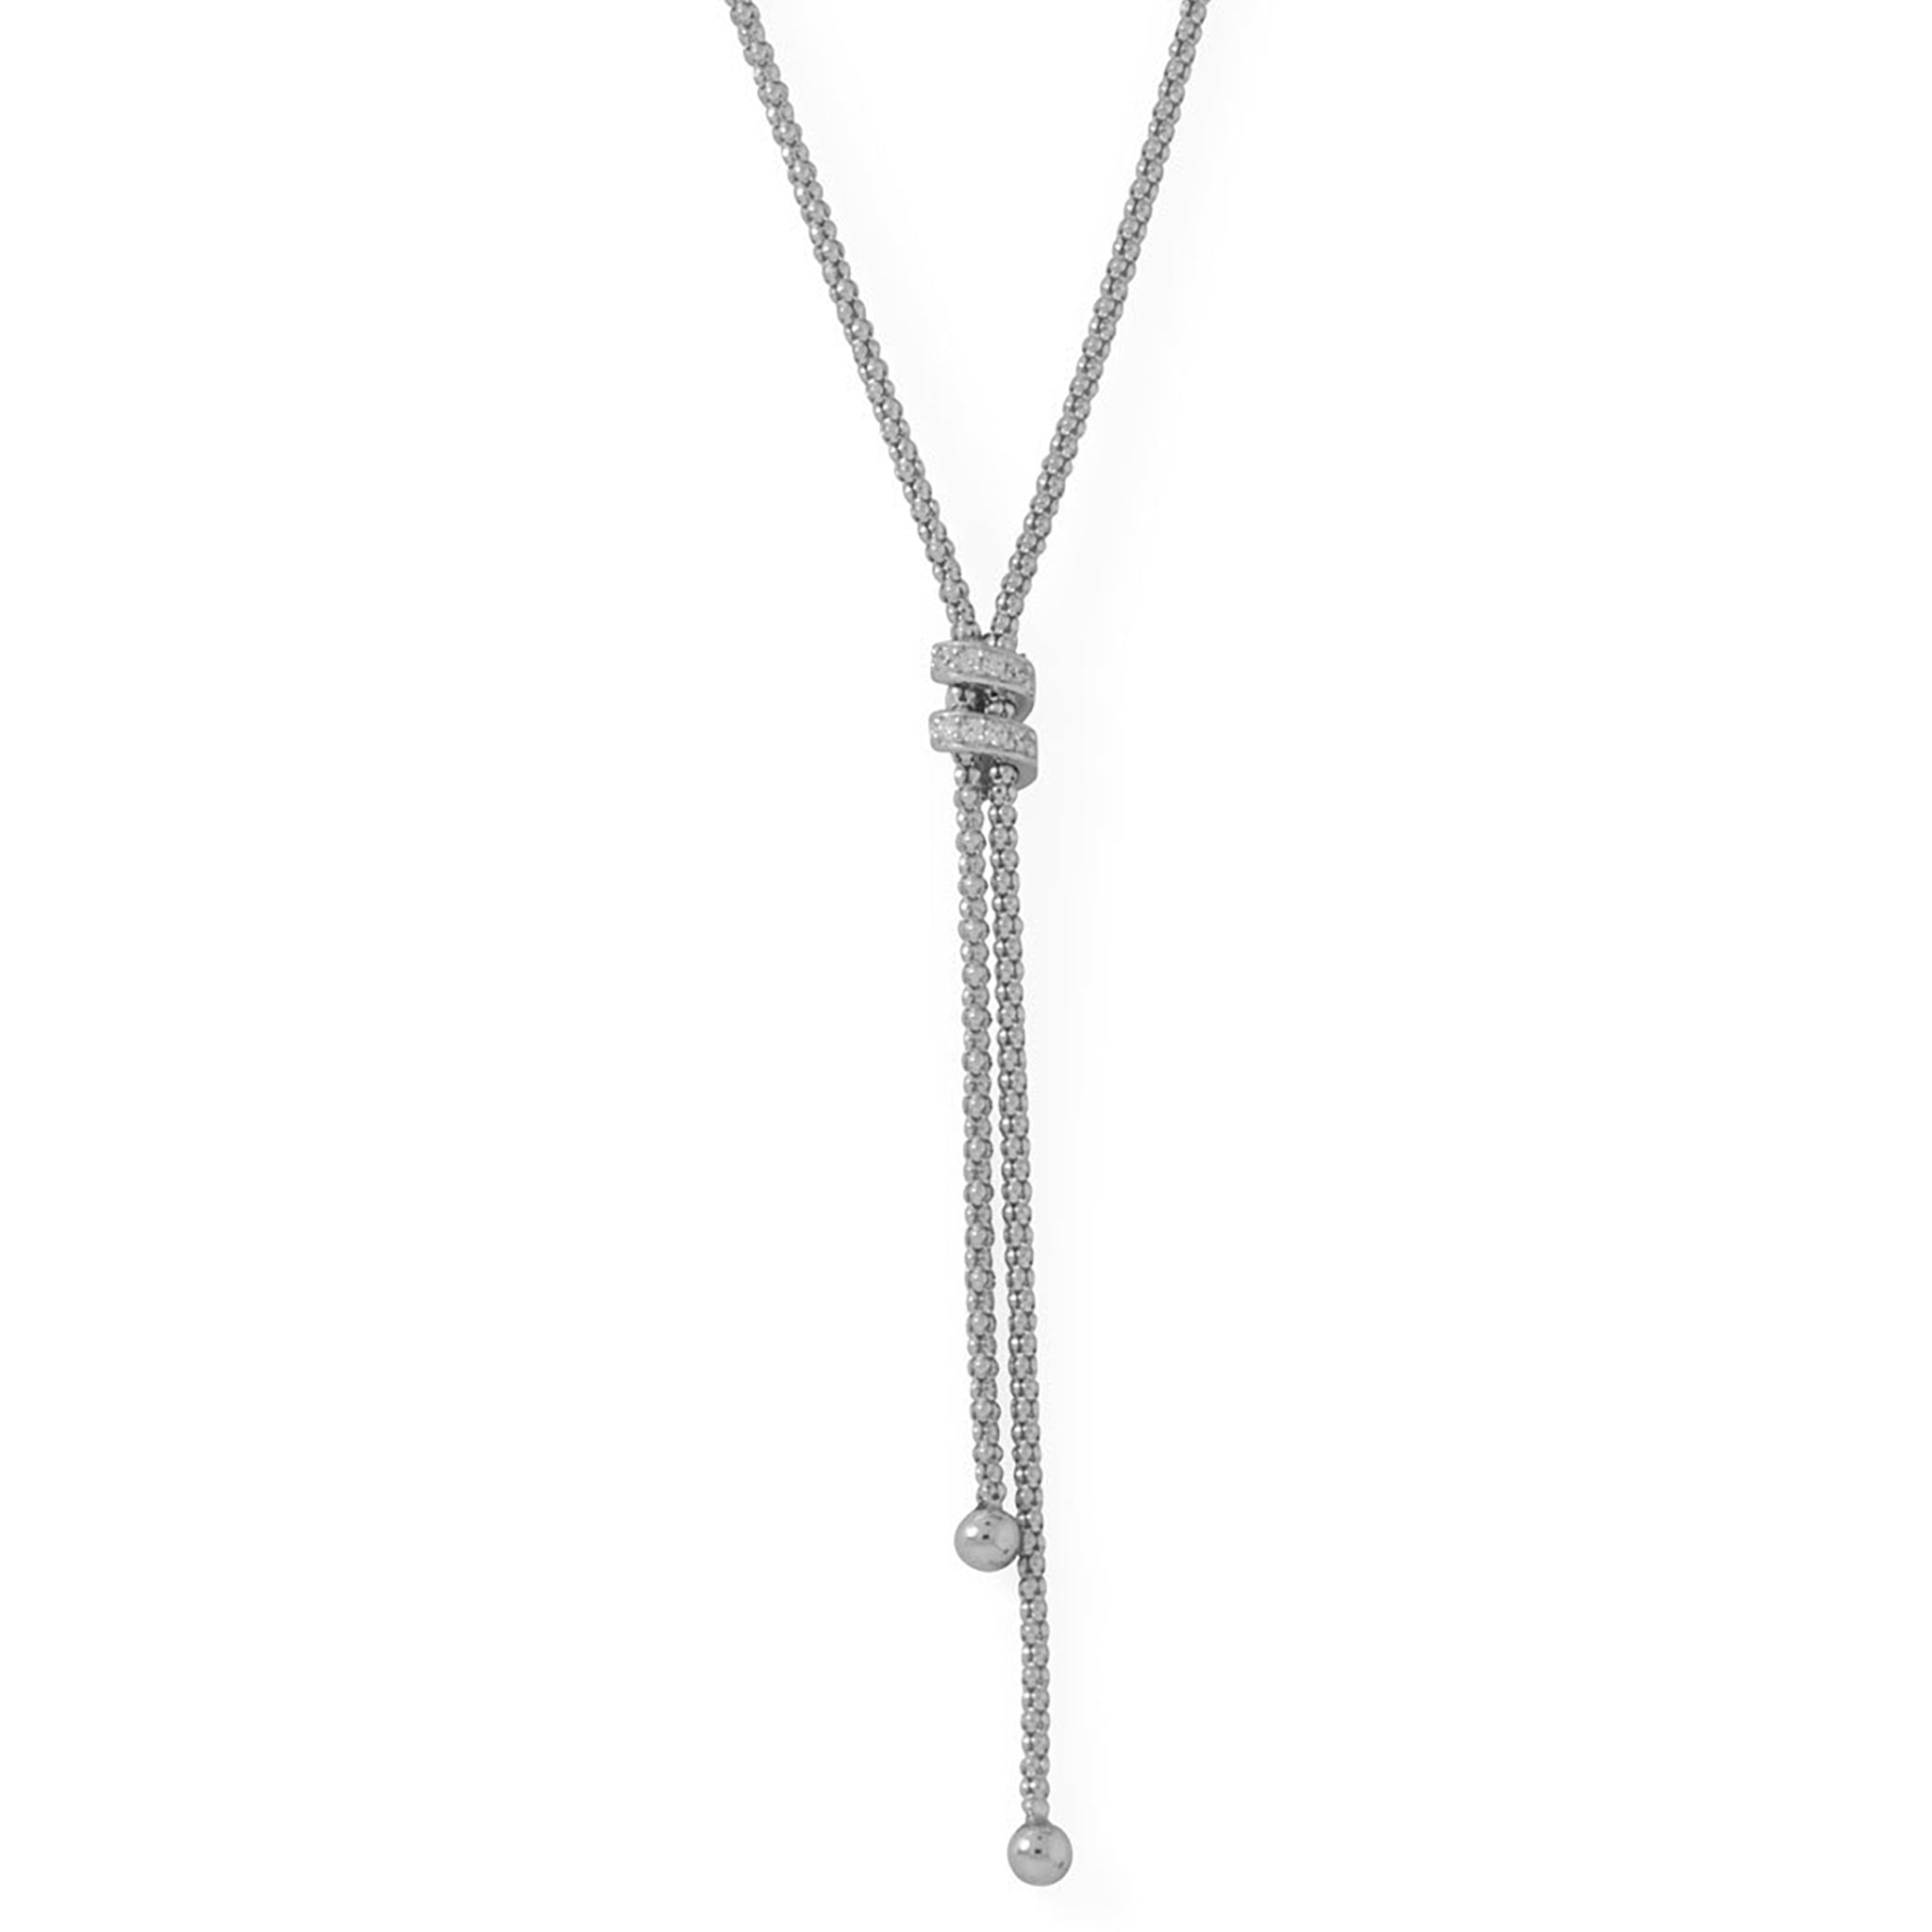 Coreana Chain Lariat Style Necklace